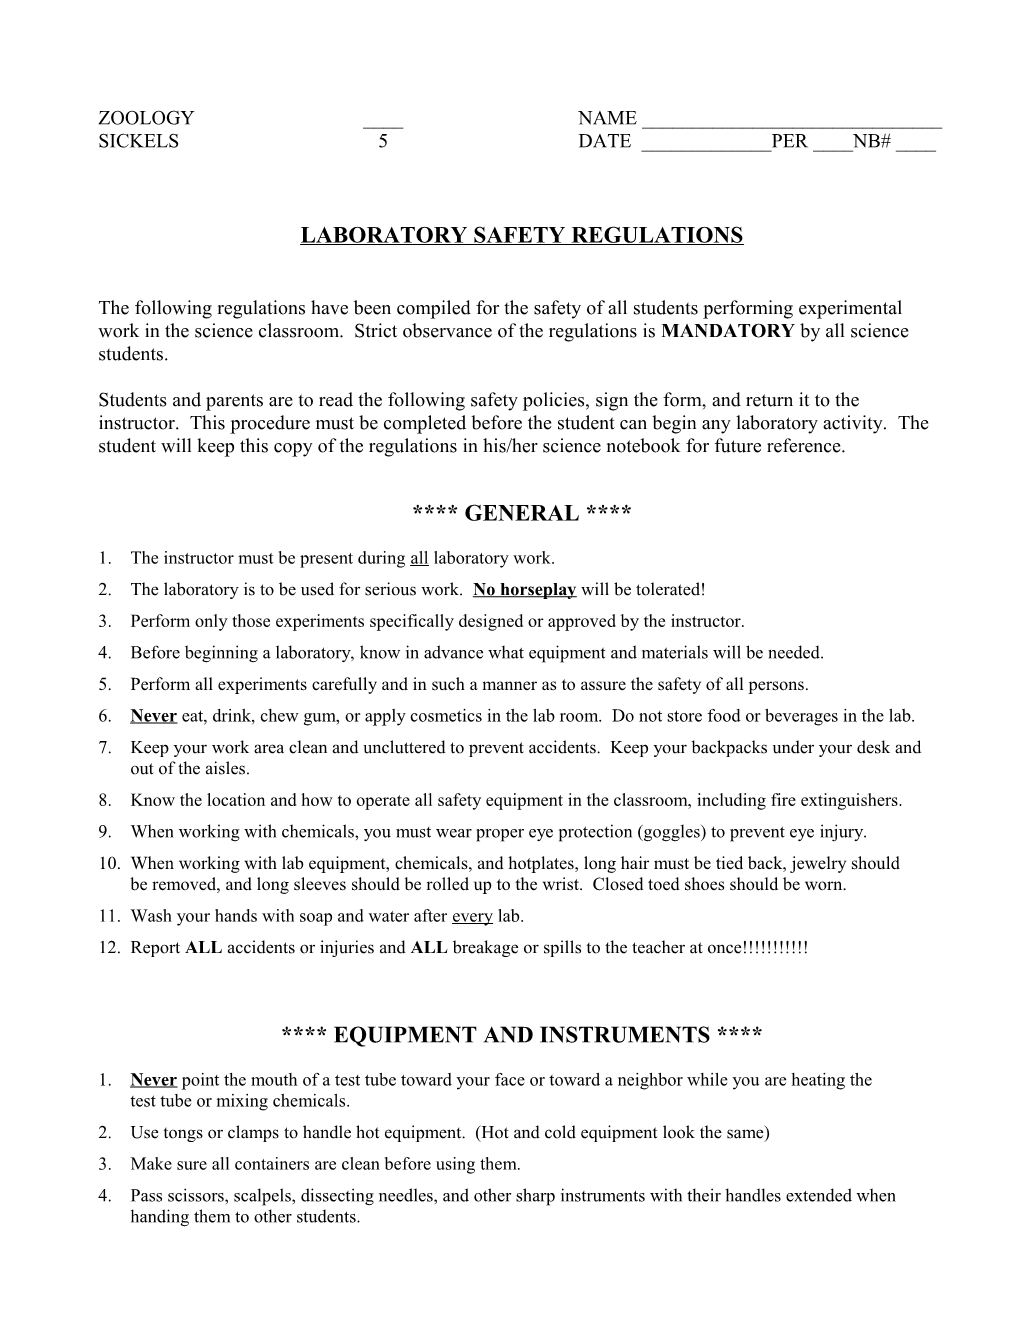 Laboratory Safety Regulations